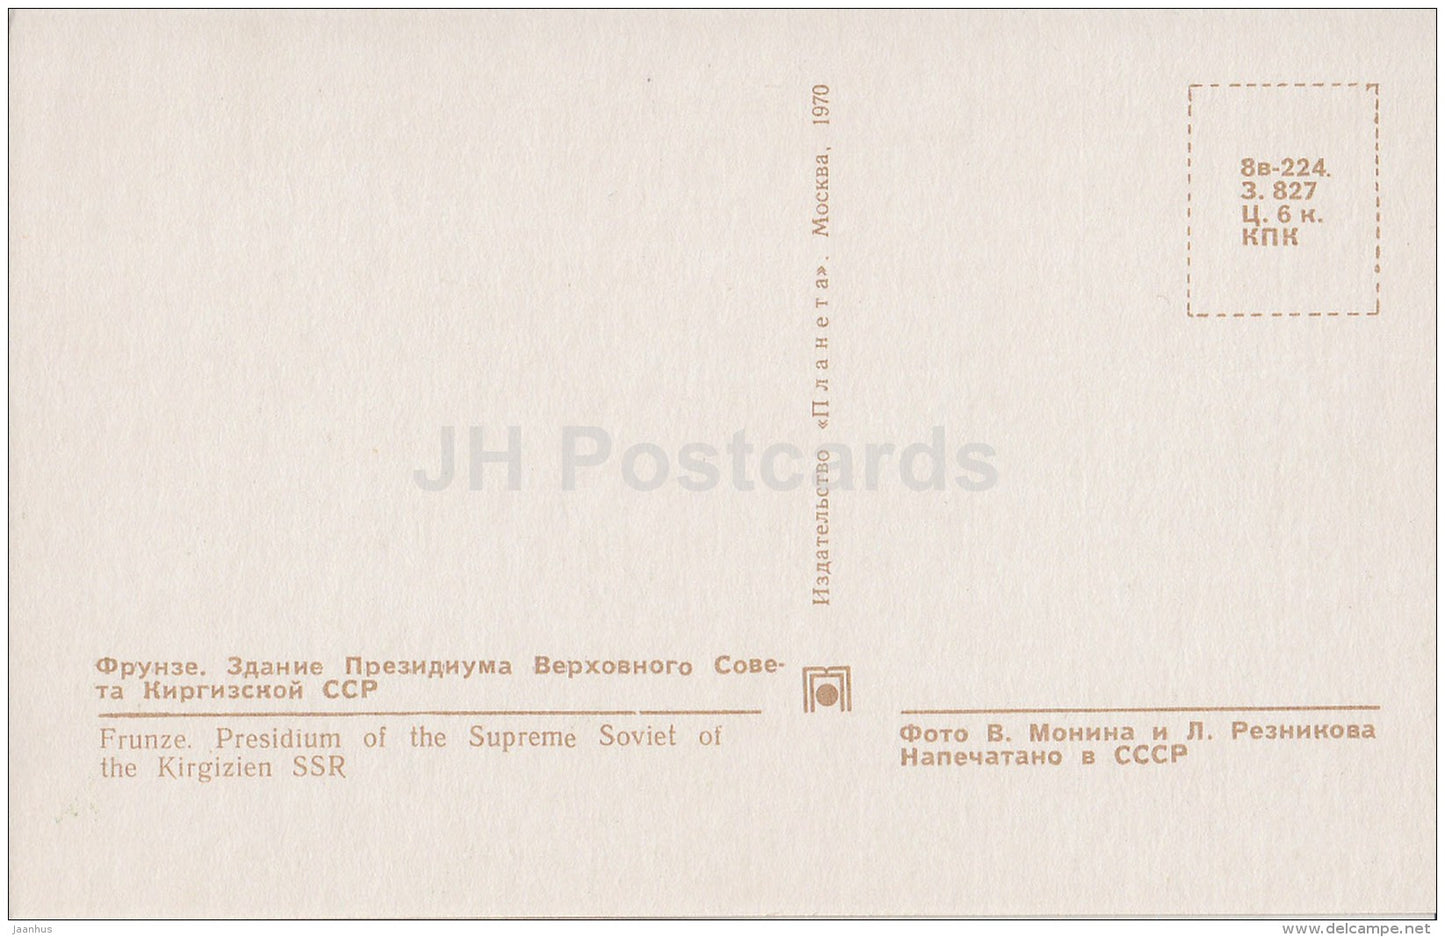 Presidium of the Supreme Soviet of Kyrgyz SSR - Bishkek - Frunze - 1970 - Kyrgystan USSR - unused - JH Postcards